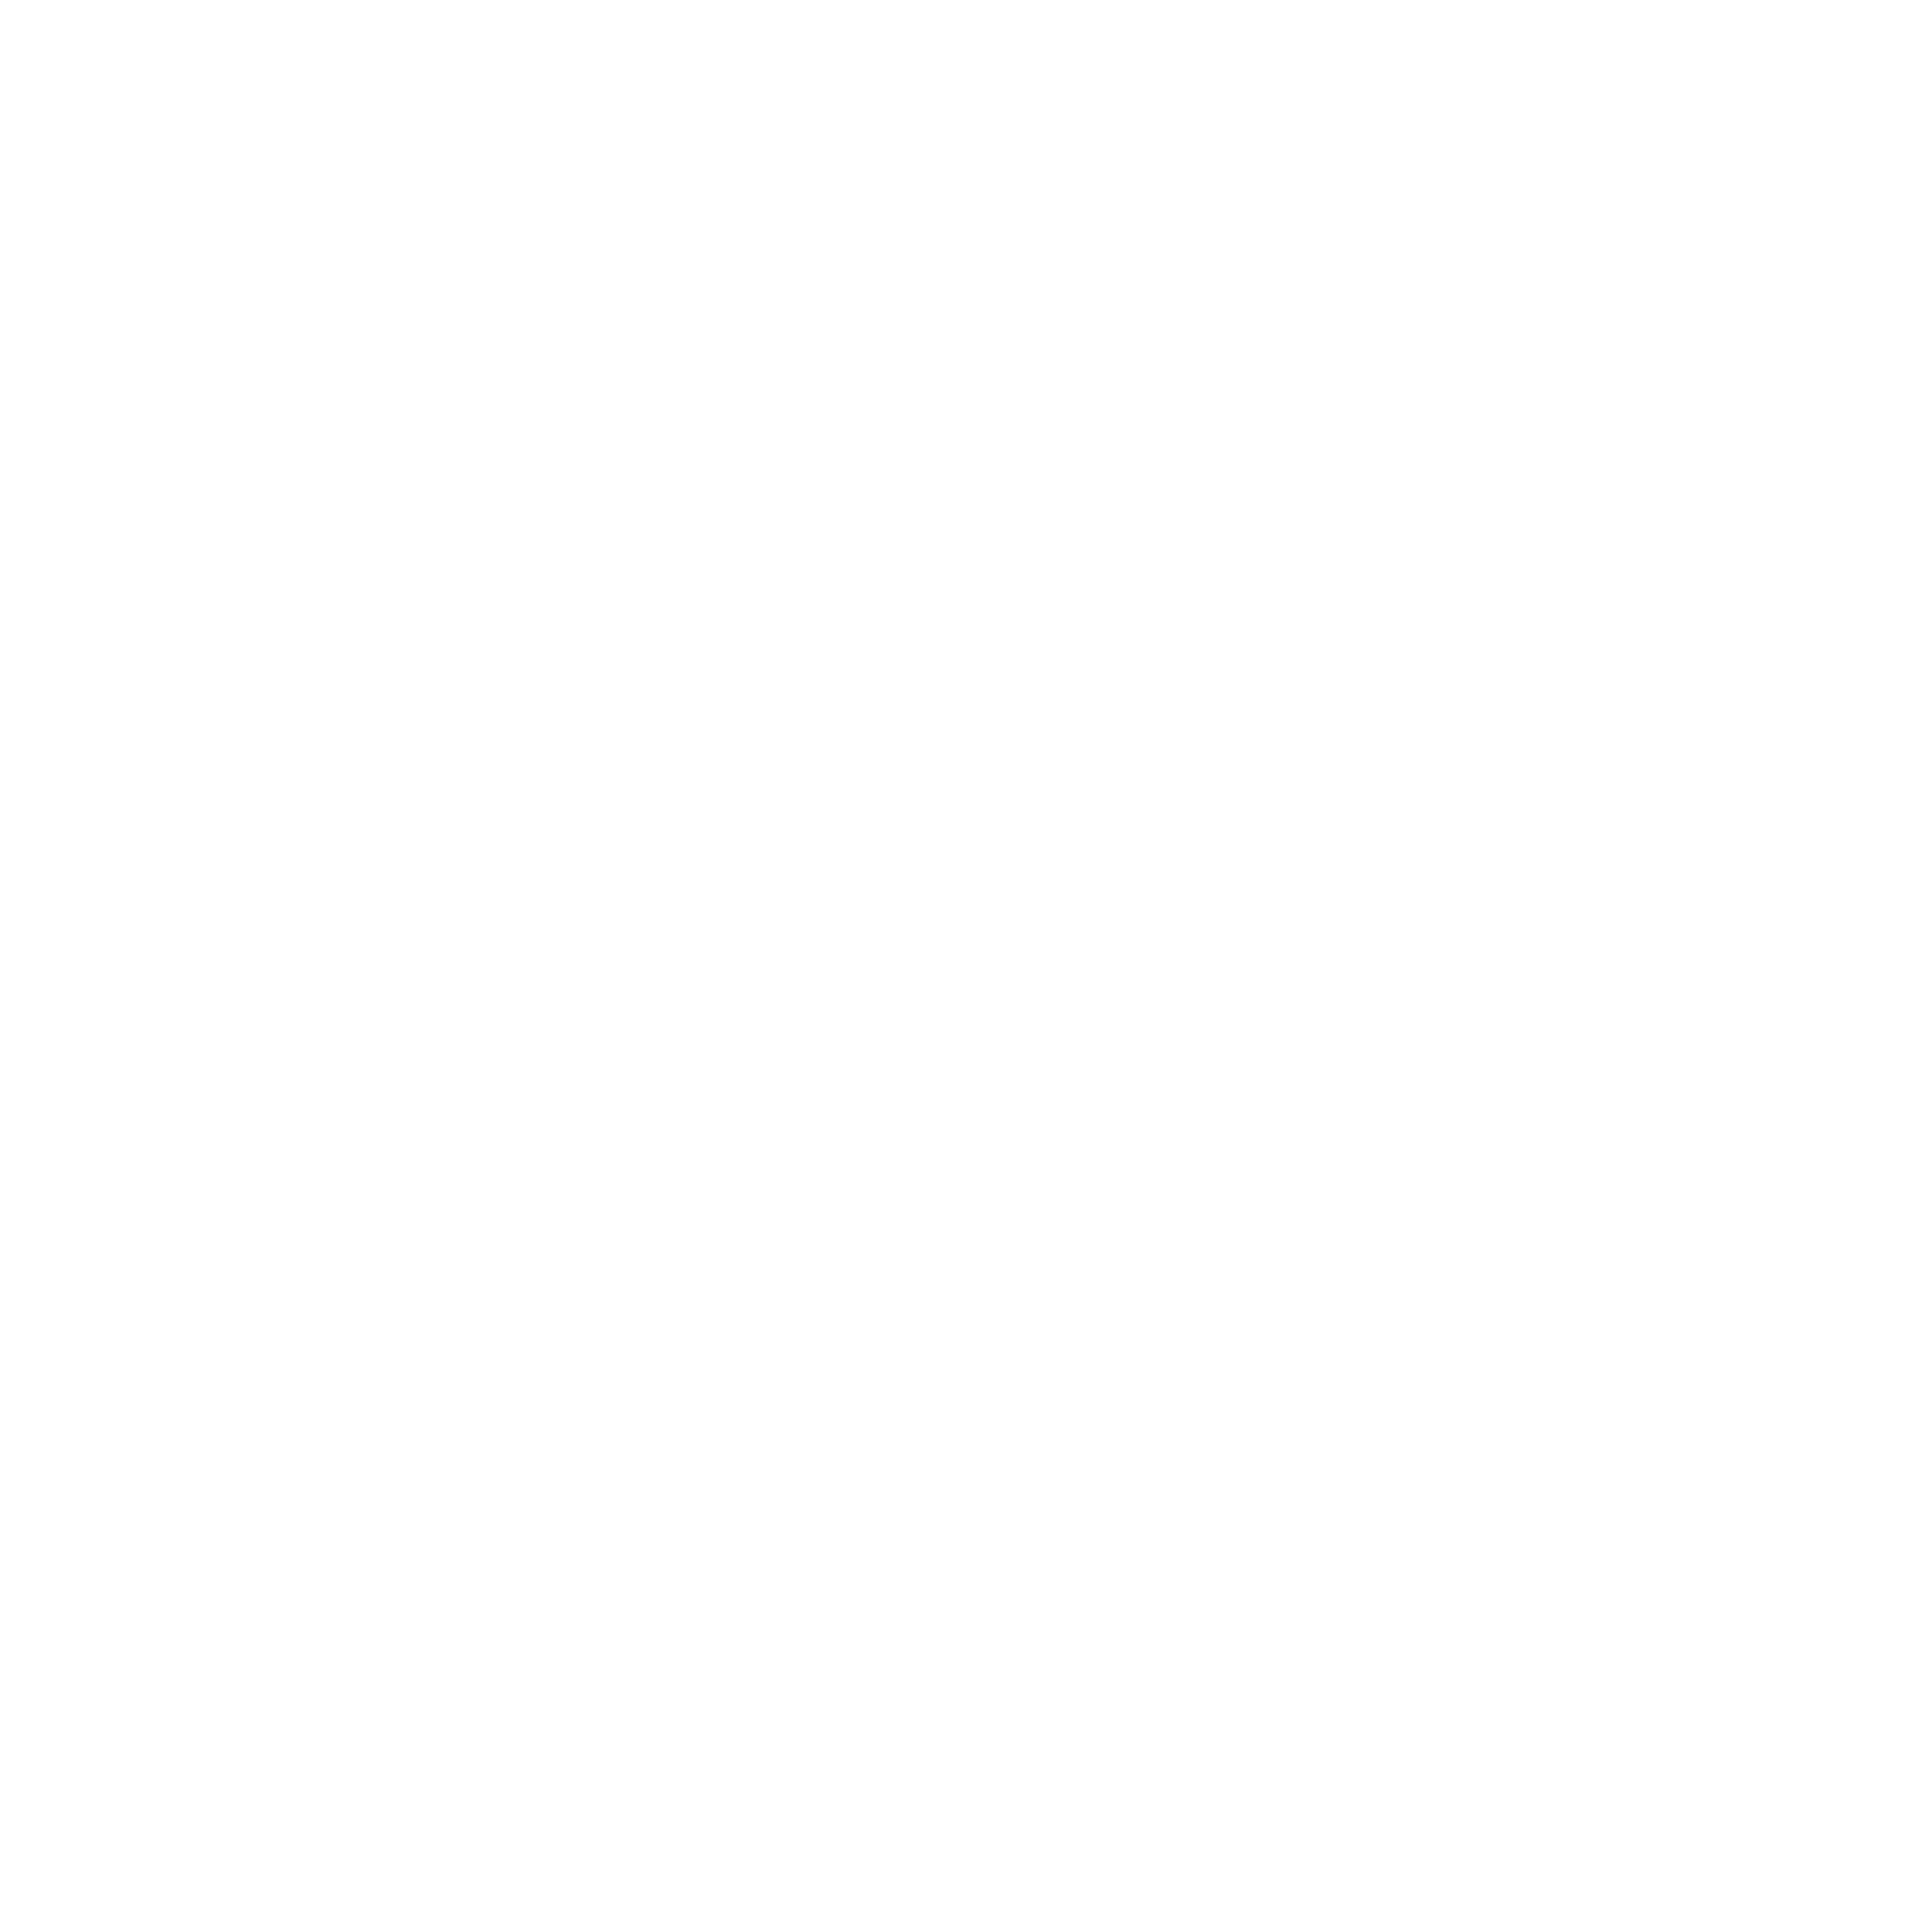 Burlingtion Logo - Burlington Coat Factory Logo PNG Transparent & SVG Vector - Freebie ...